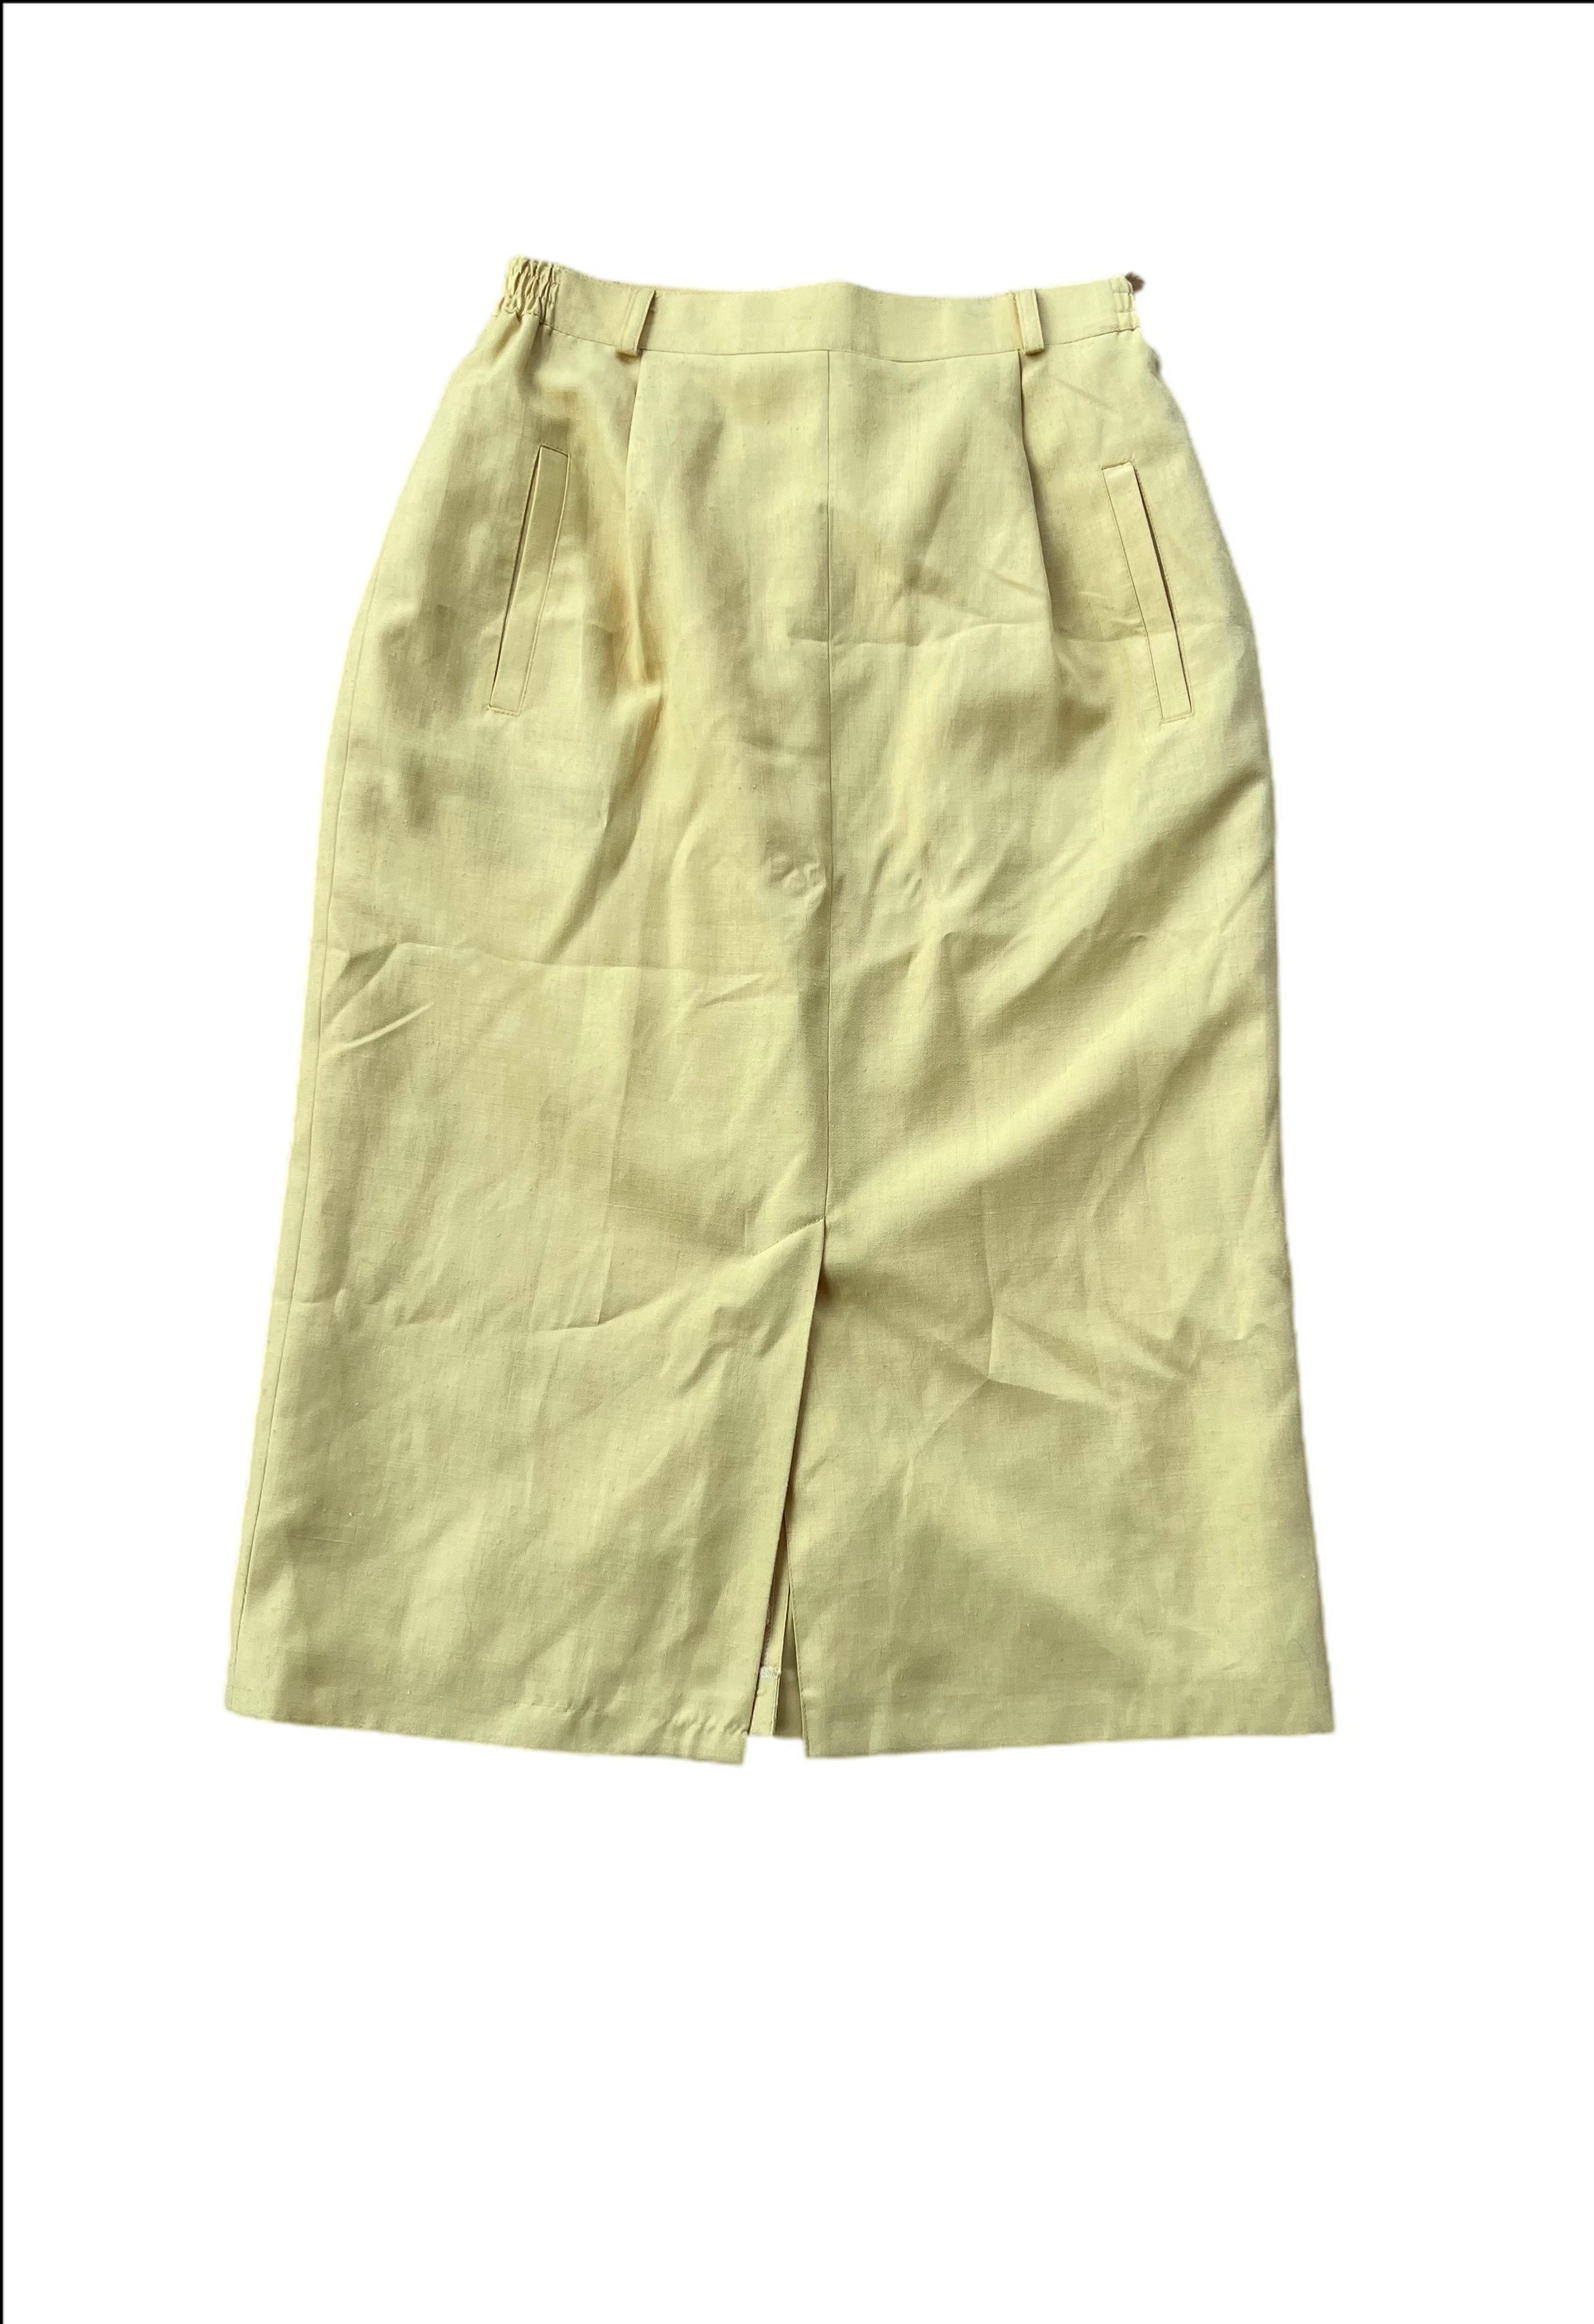 Bardehle Skirt